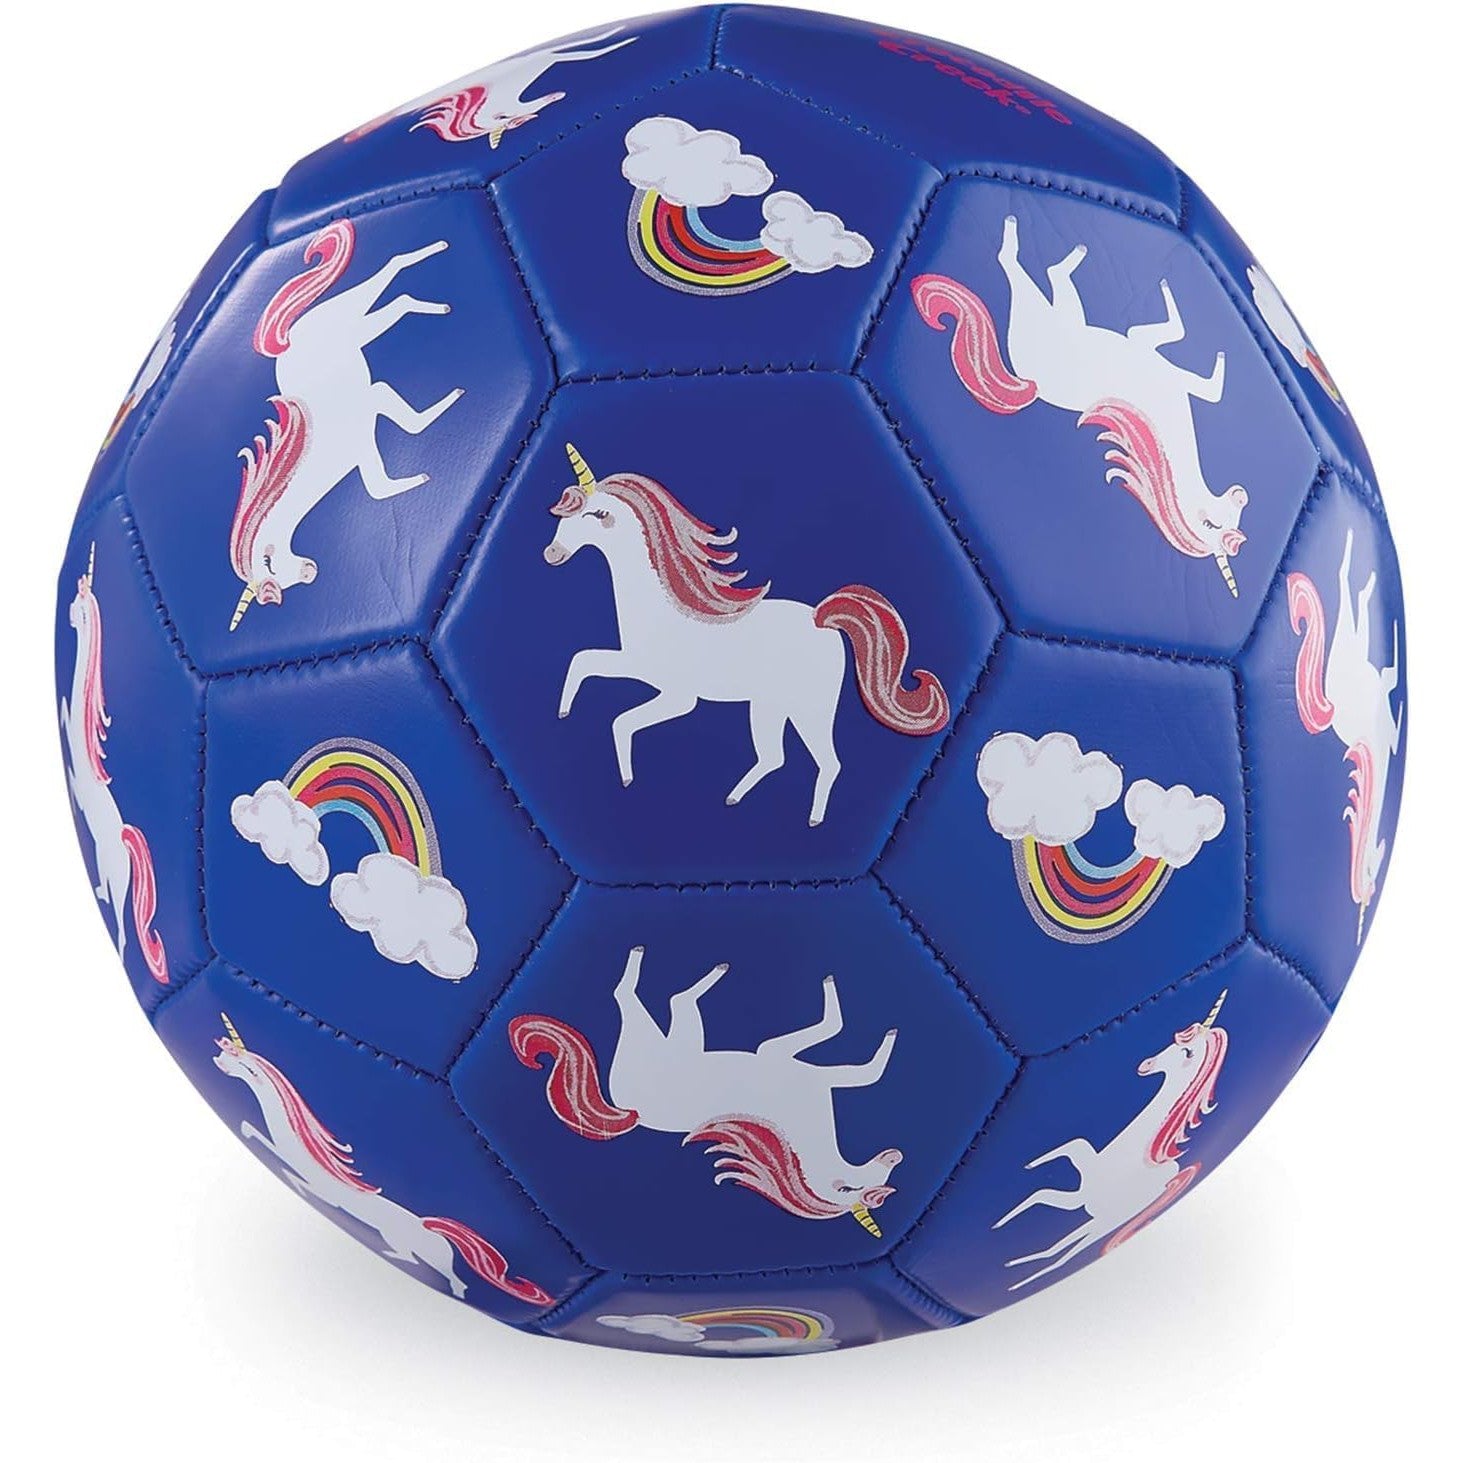 Size 2 Soccer Ball - Unicorn-Active & Sports-Crocodile Creek-Yellow Springs Toy Company